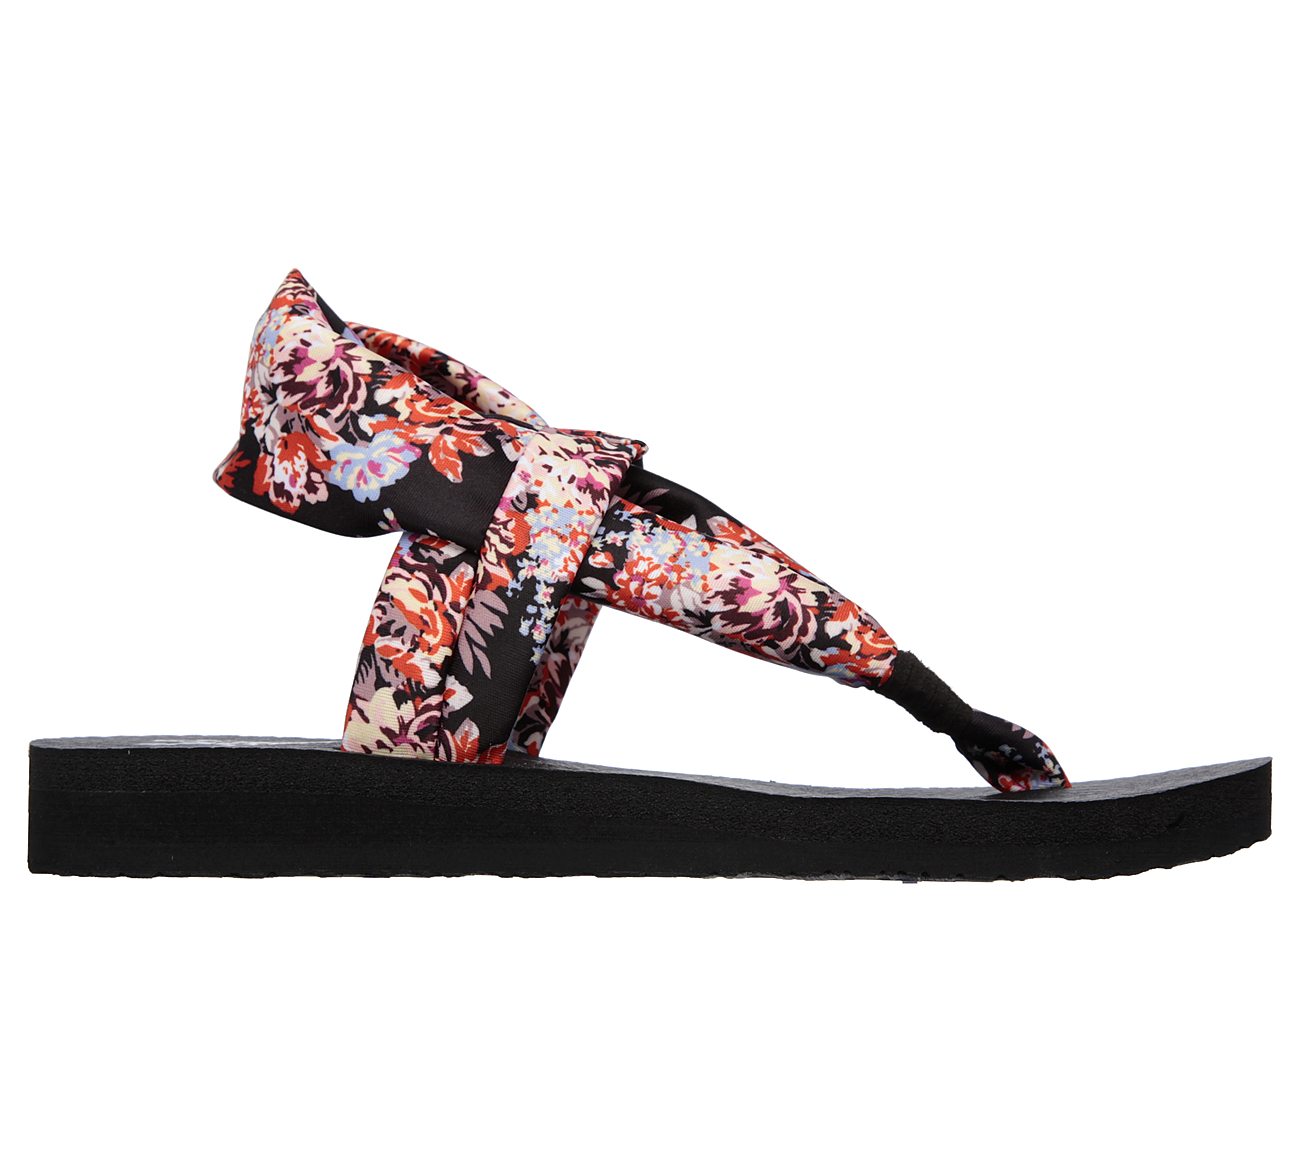 Buy SKECHERS Meditation - Dandelion Comfort Sandals Shoes